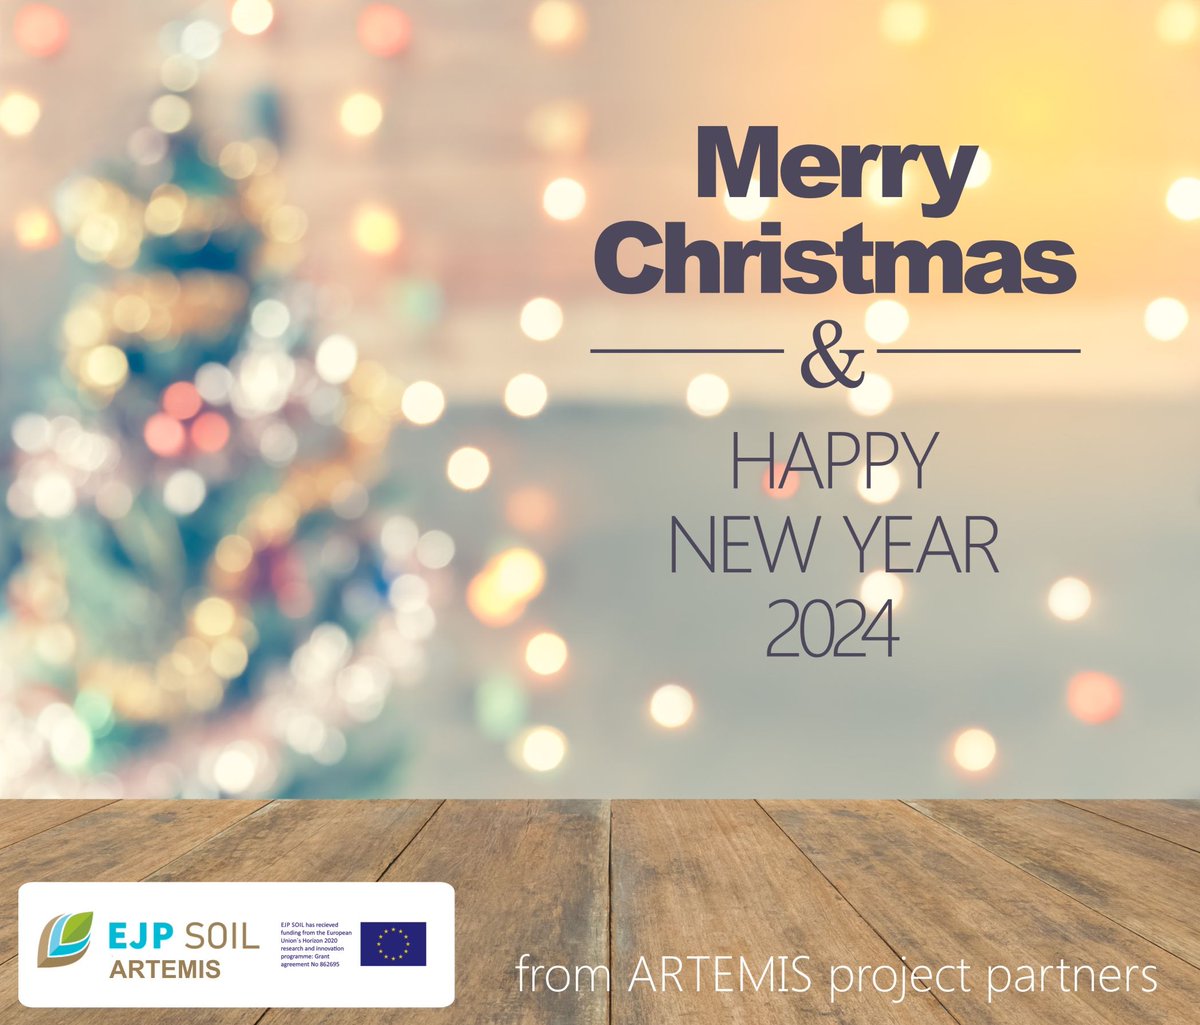 Dear EJP SOIL friends! Wishing you health, happiness and prosperity in the new year!
@EJPSOIL_Artemis